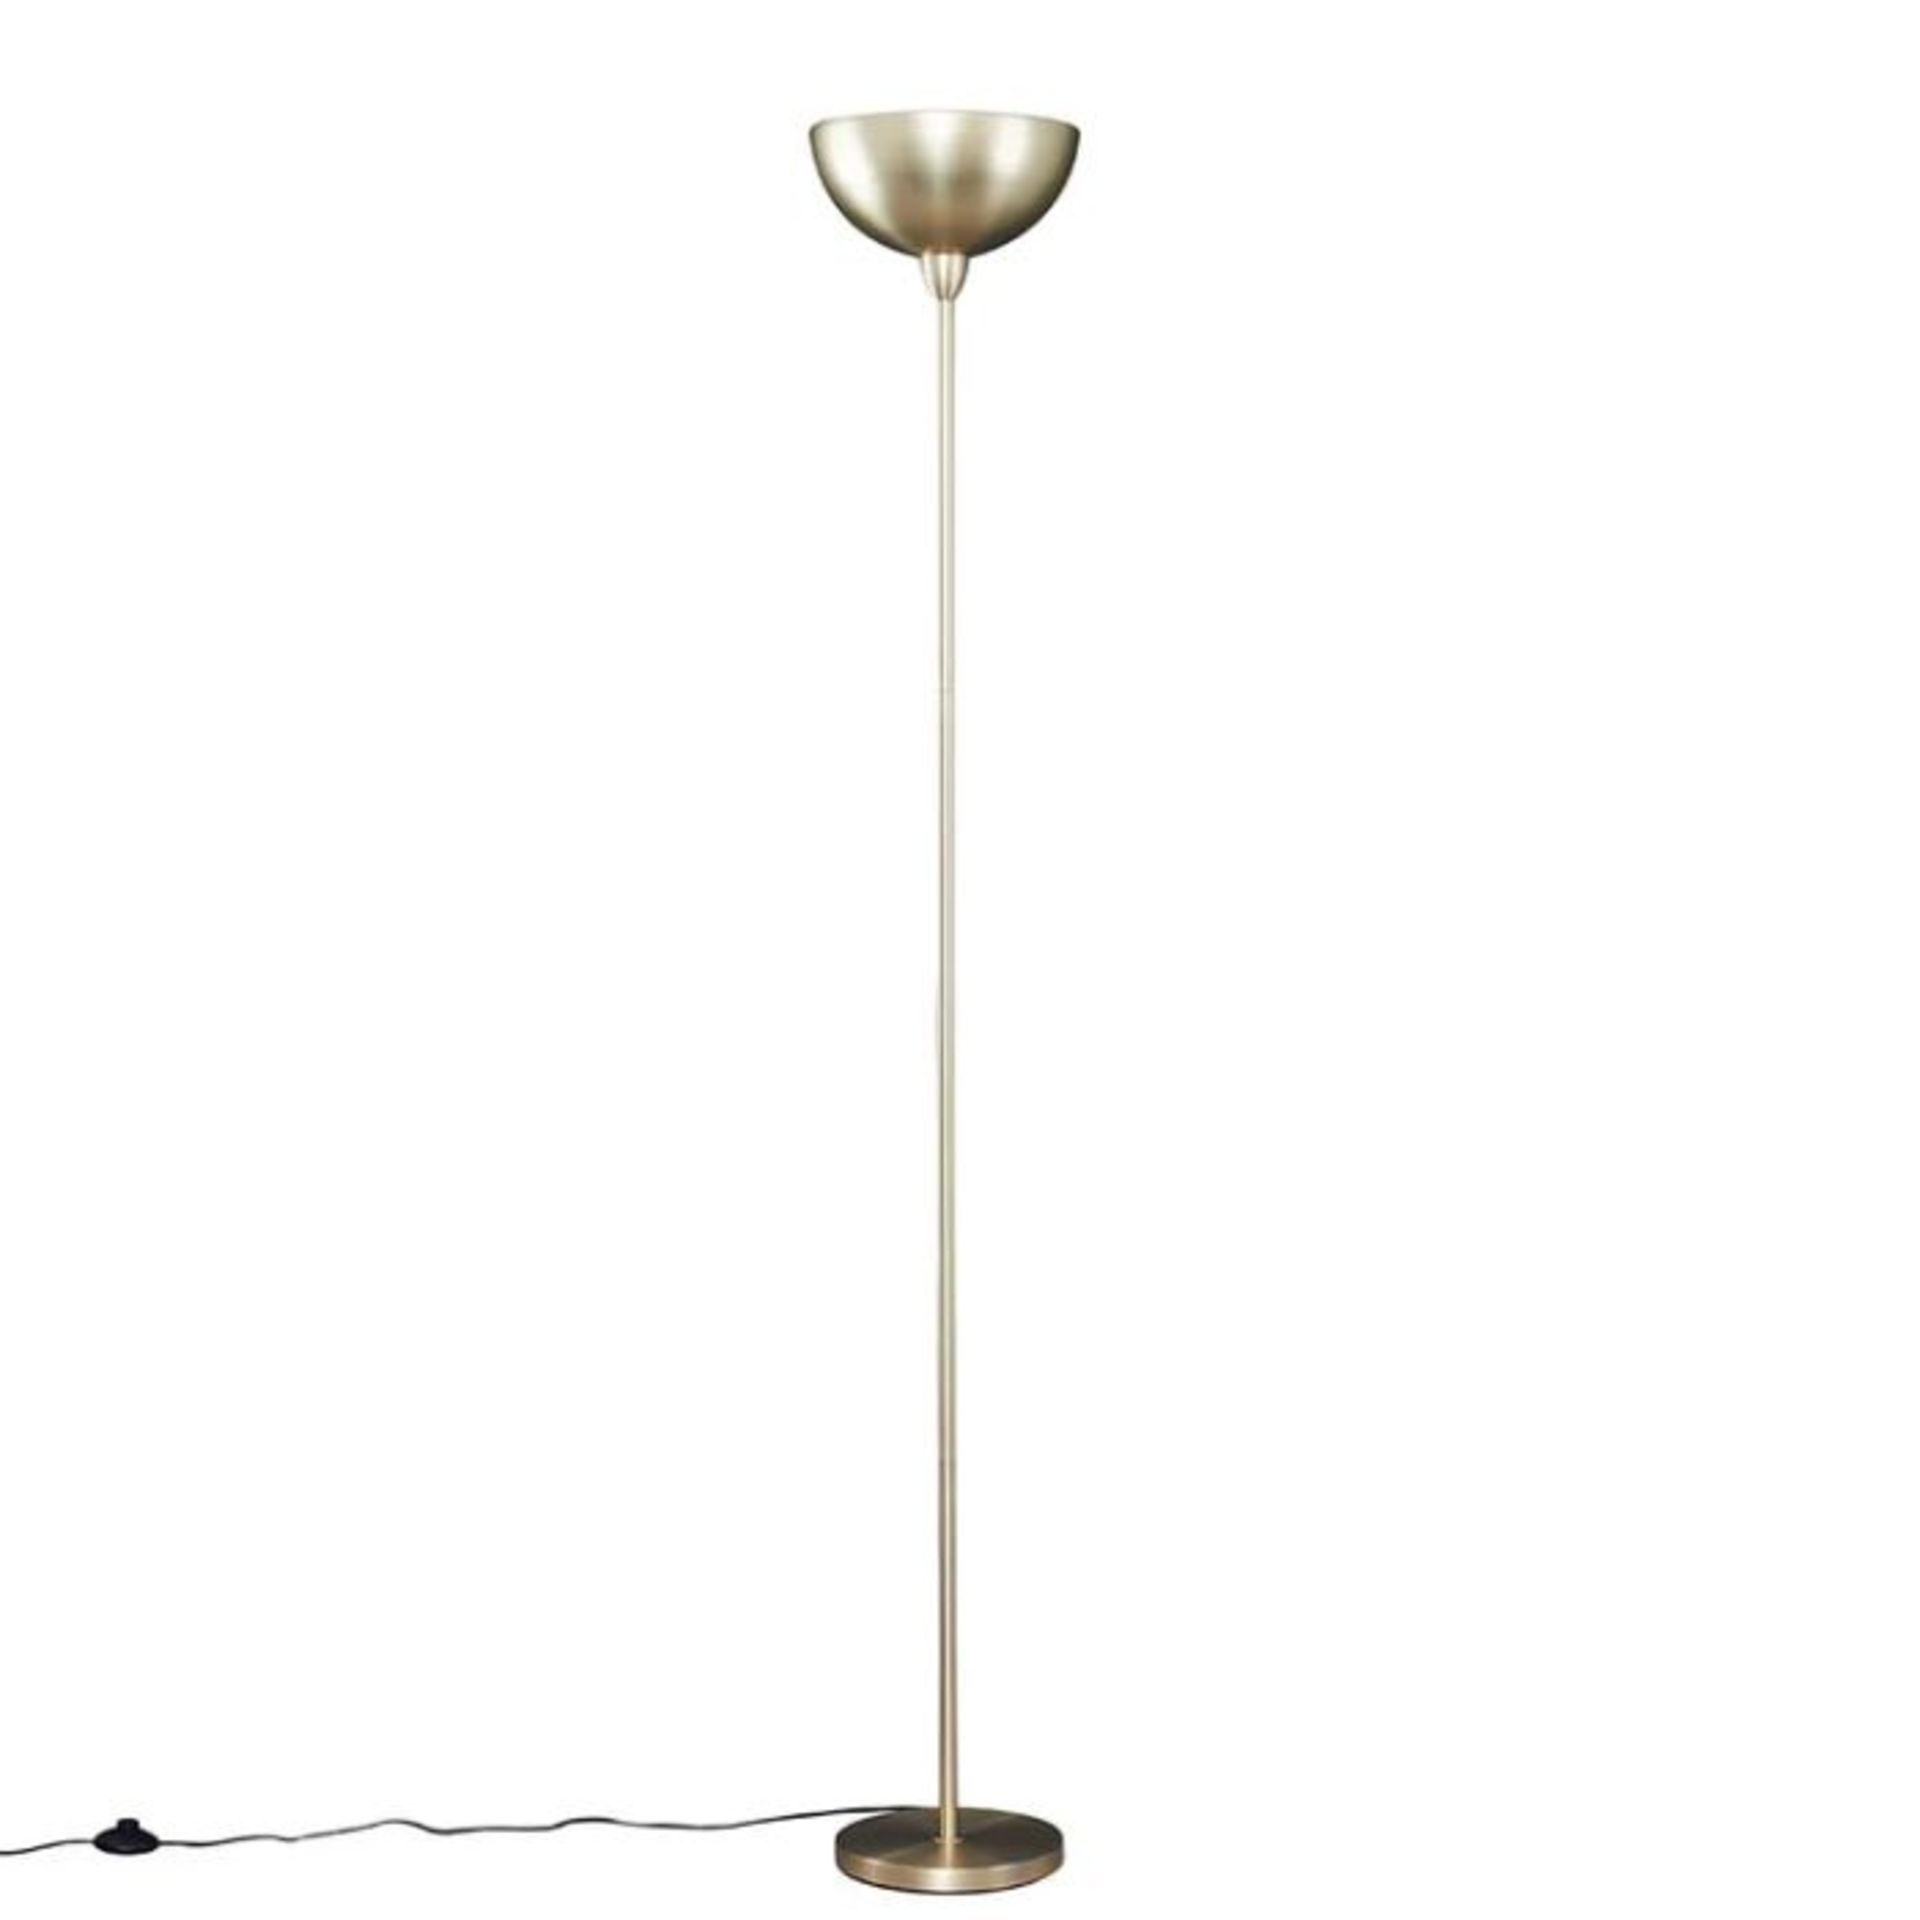 17 Stories, Carolinda 180cm Uplighter Floor Lamp (MATTE GOLD) - RRP £45.99 (MSUN8139 - 29254/11)